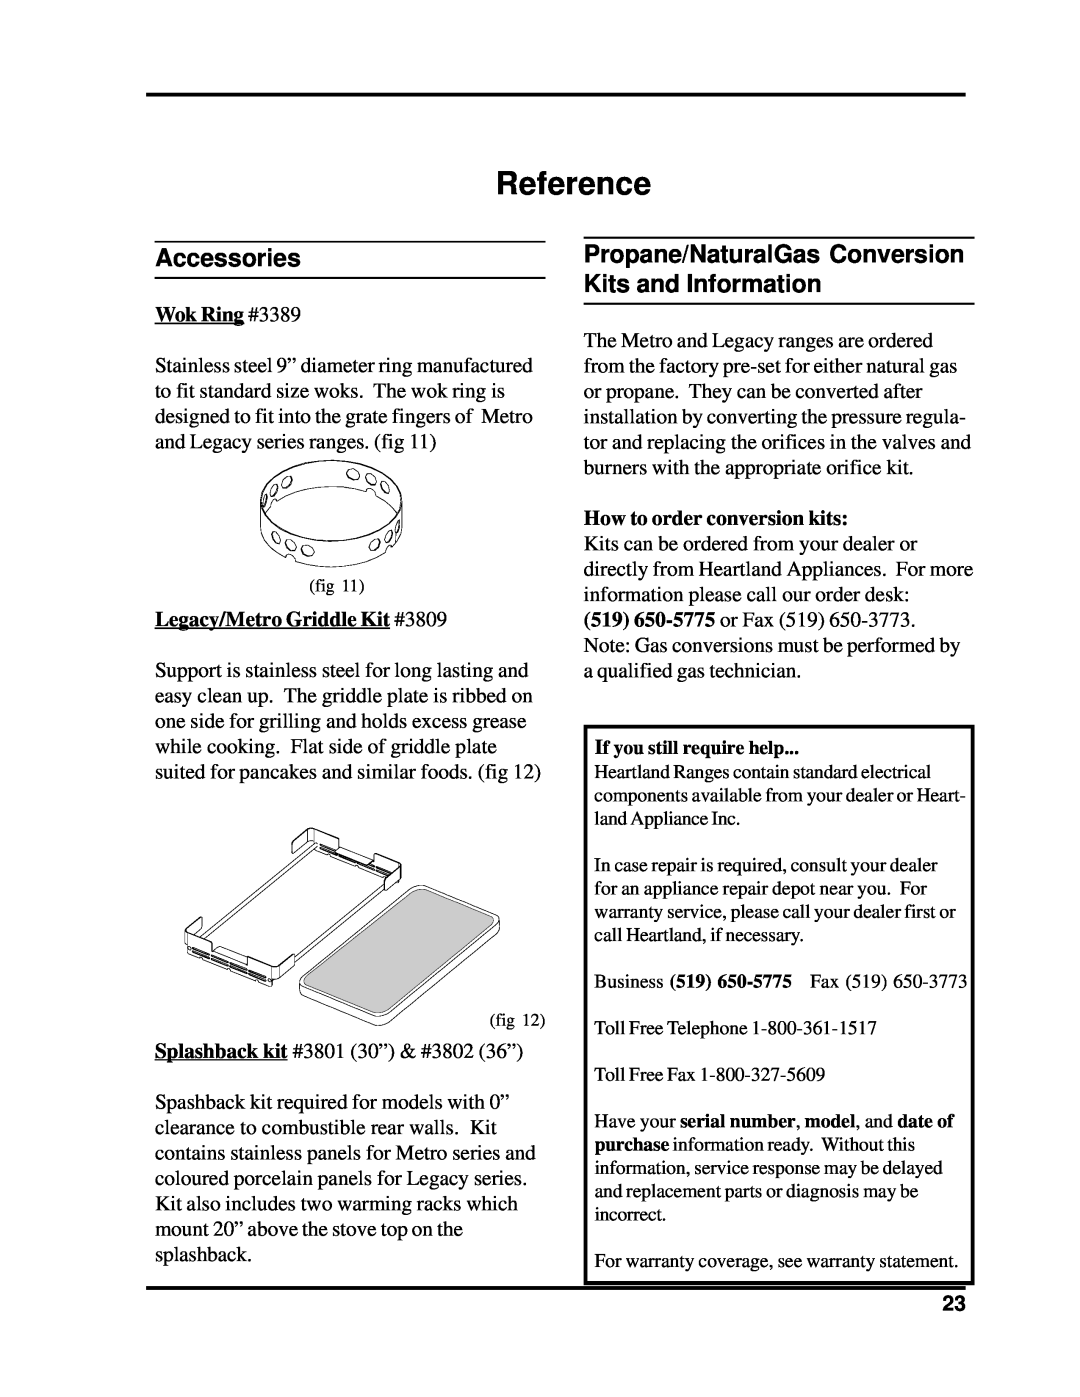 Heartland Bakeware 3805-3825, 3800-3820 manual Reference, Accessories, Propane/NaturalGas Conversion Kits and Information 